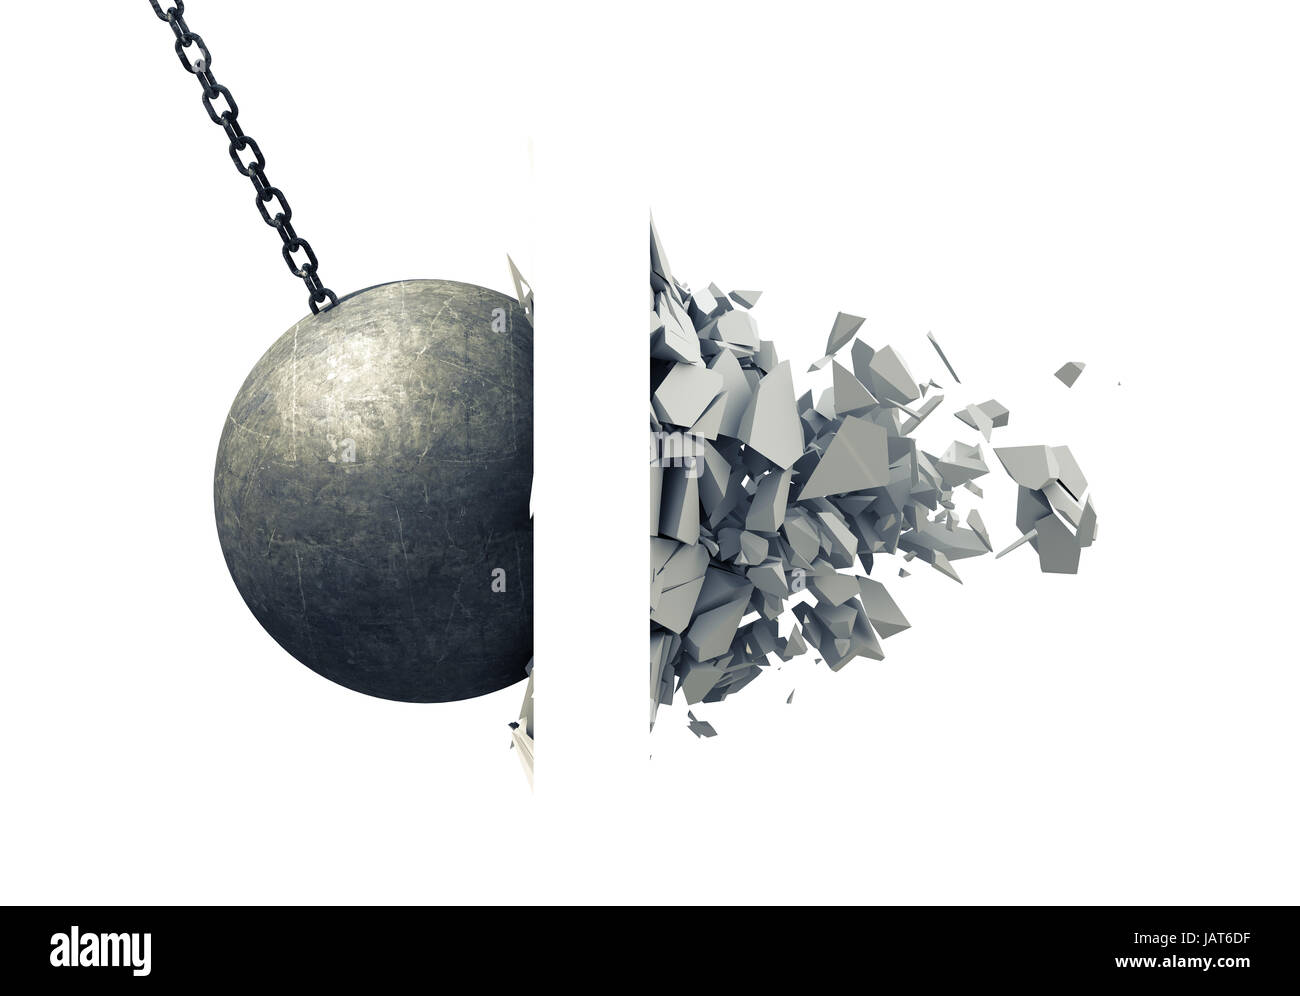 Metallic Wrecking Ball Shattering Wall. 3D Illustration. Stock Photo